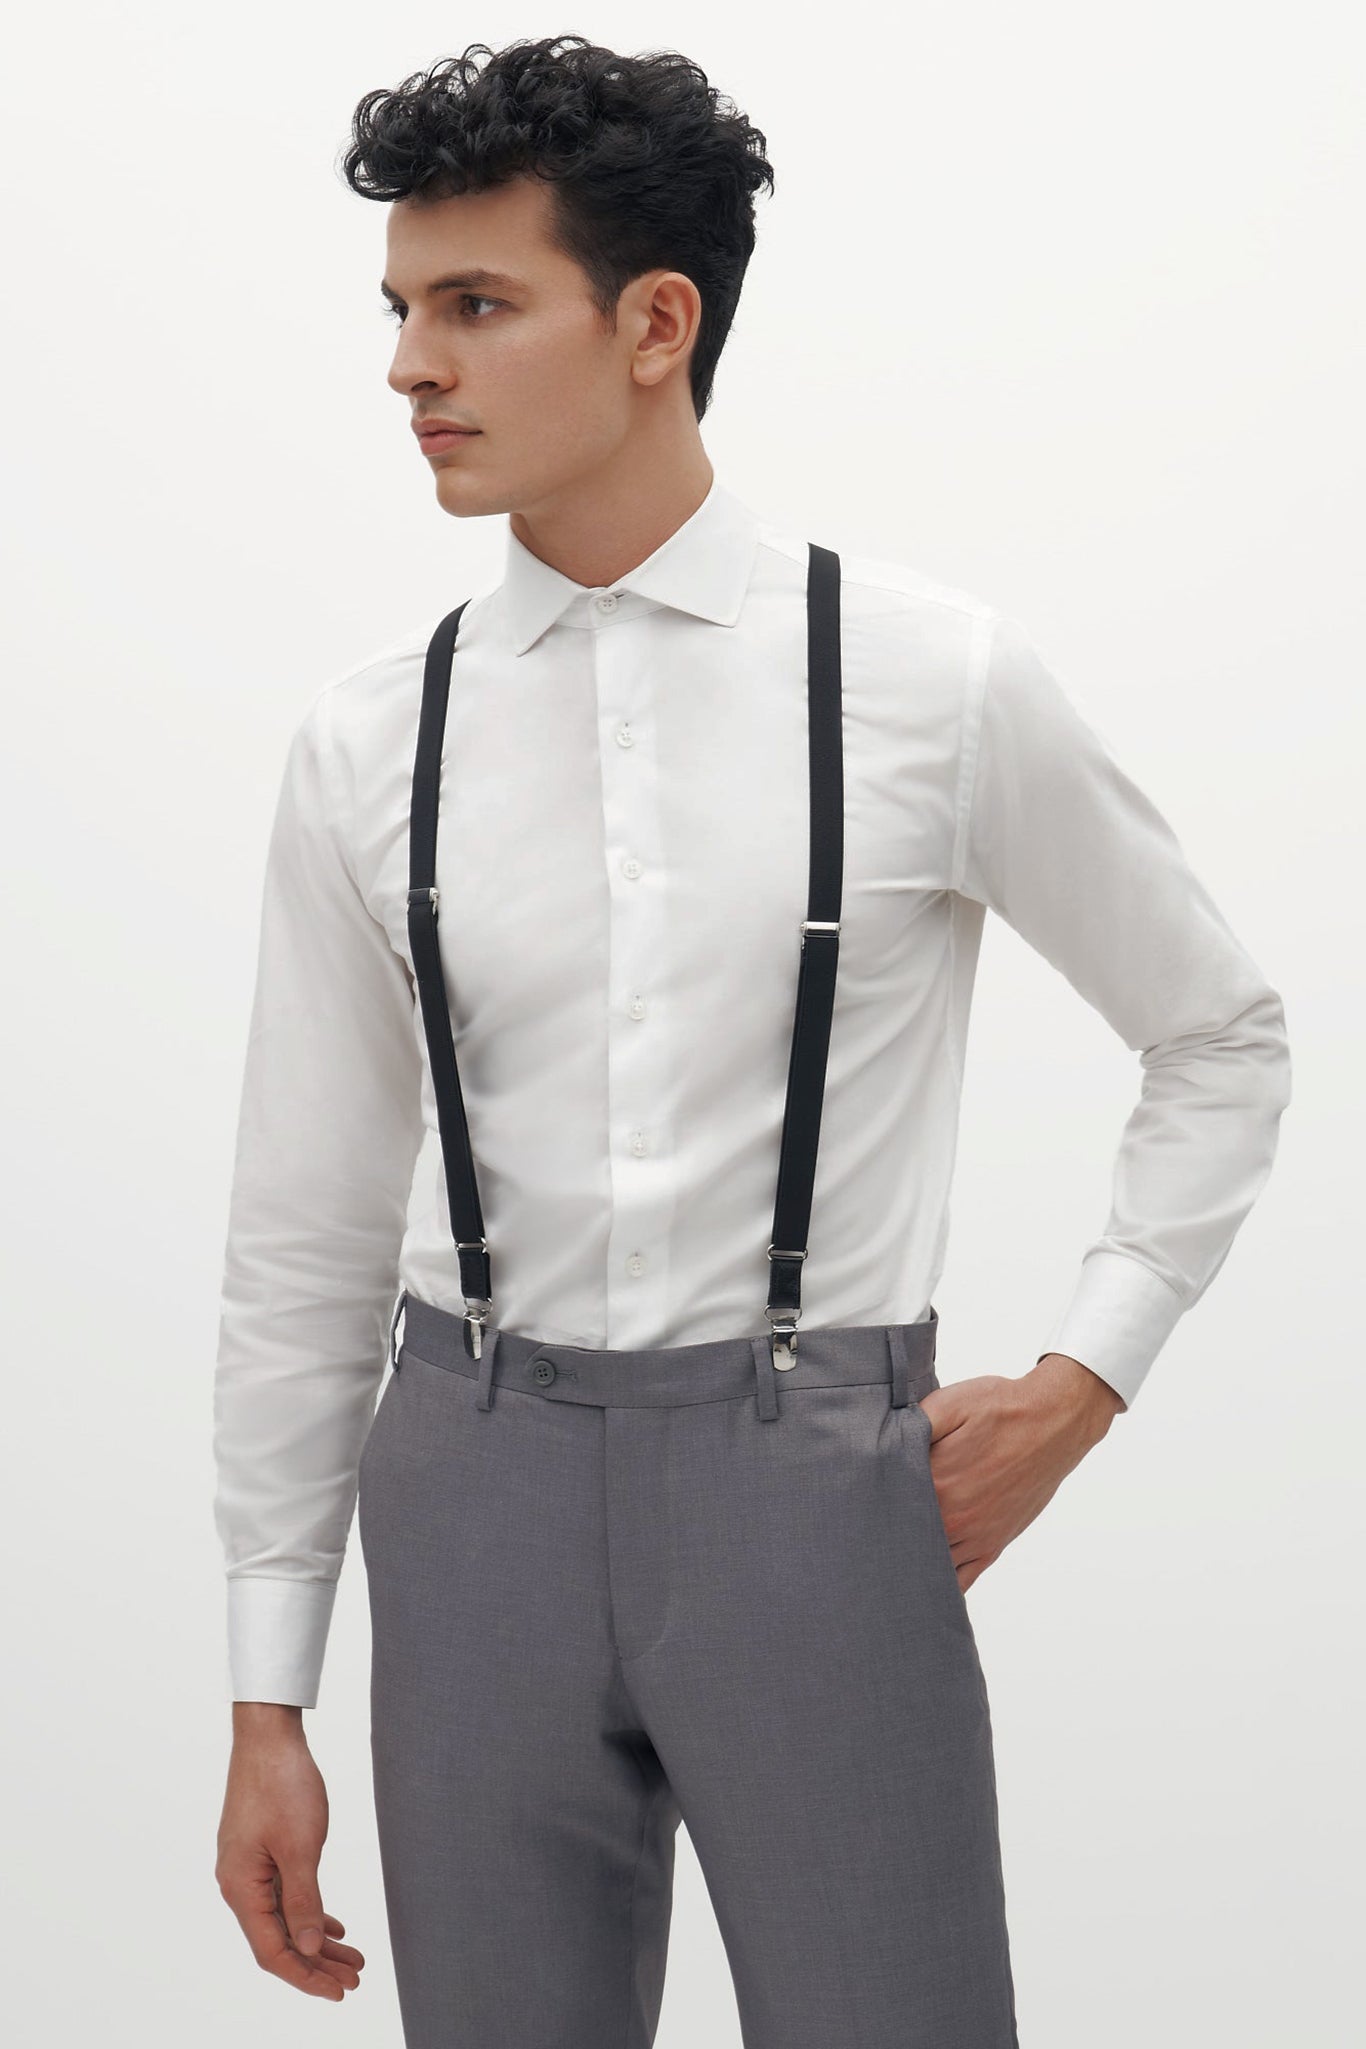 Black Classic Suspenders by SuitShop, front view